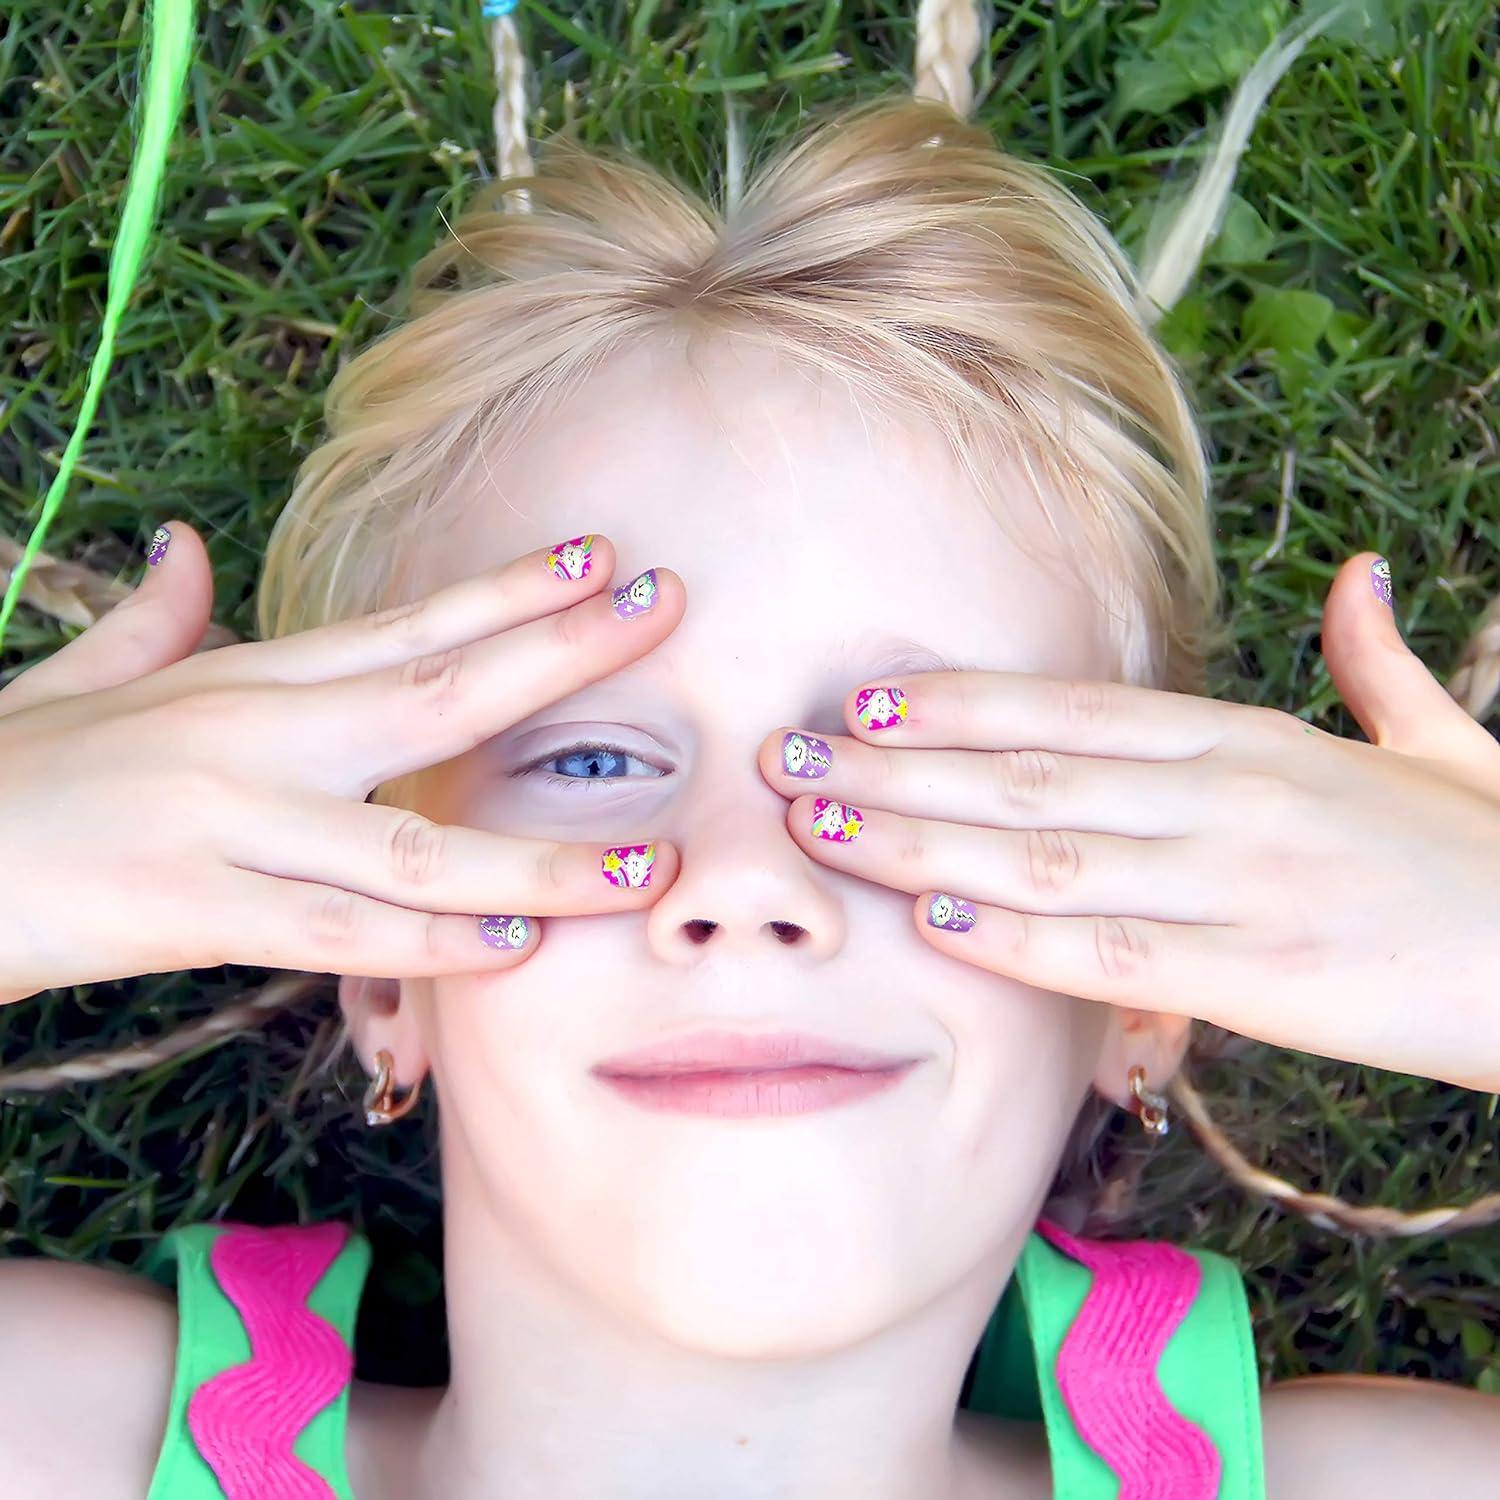 Hot Focus Unicorn Nail Kit – Kids Nail Polish Set for Girls Ages 5